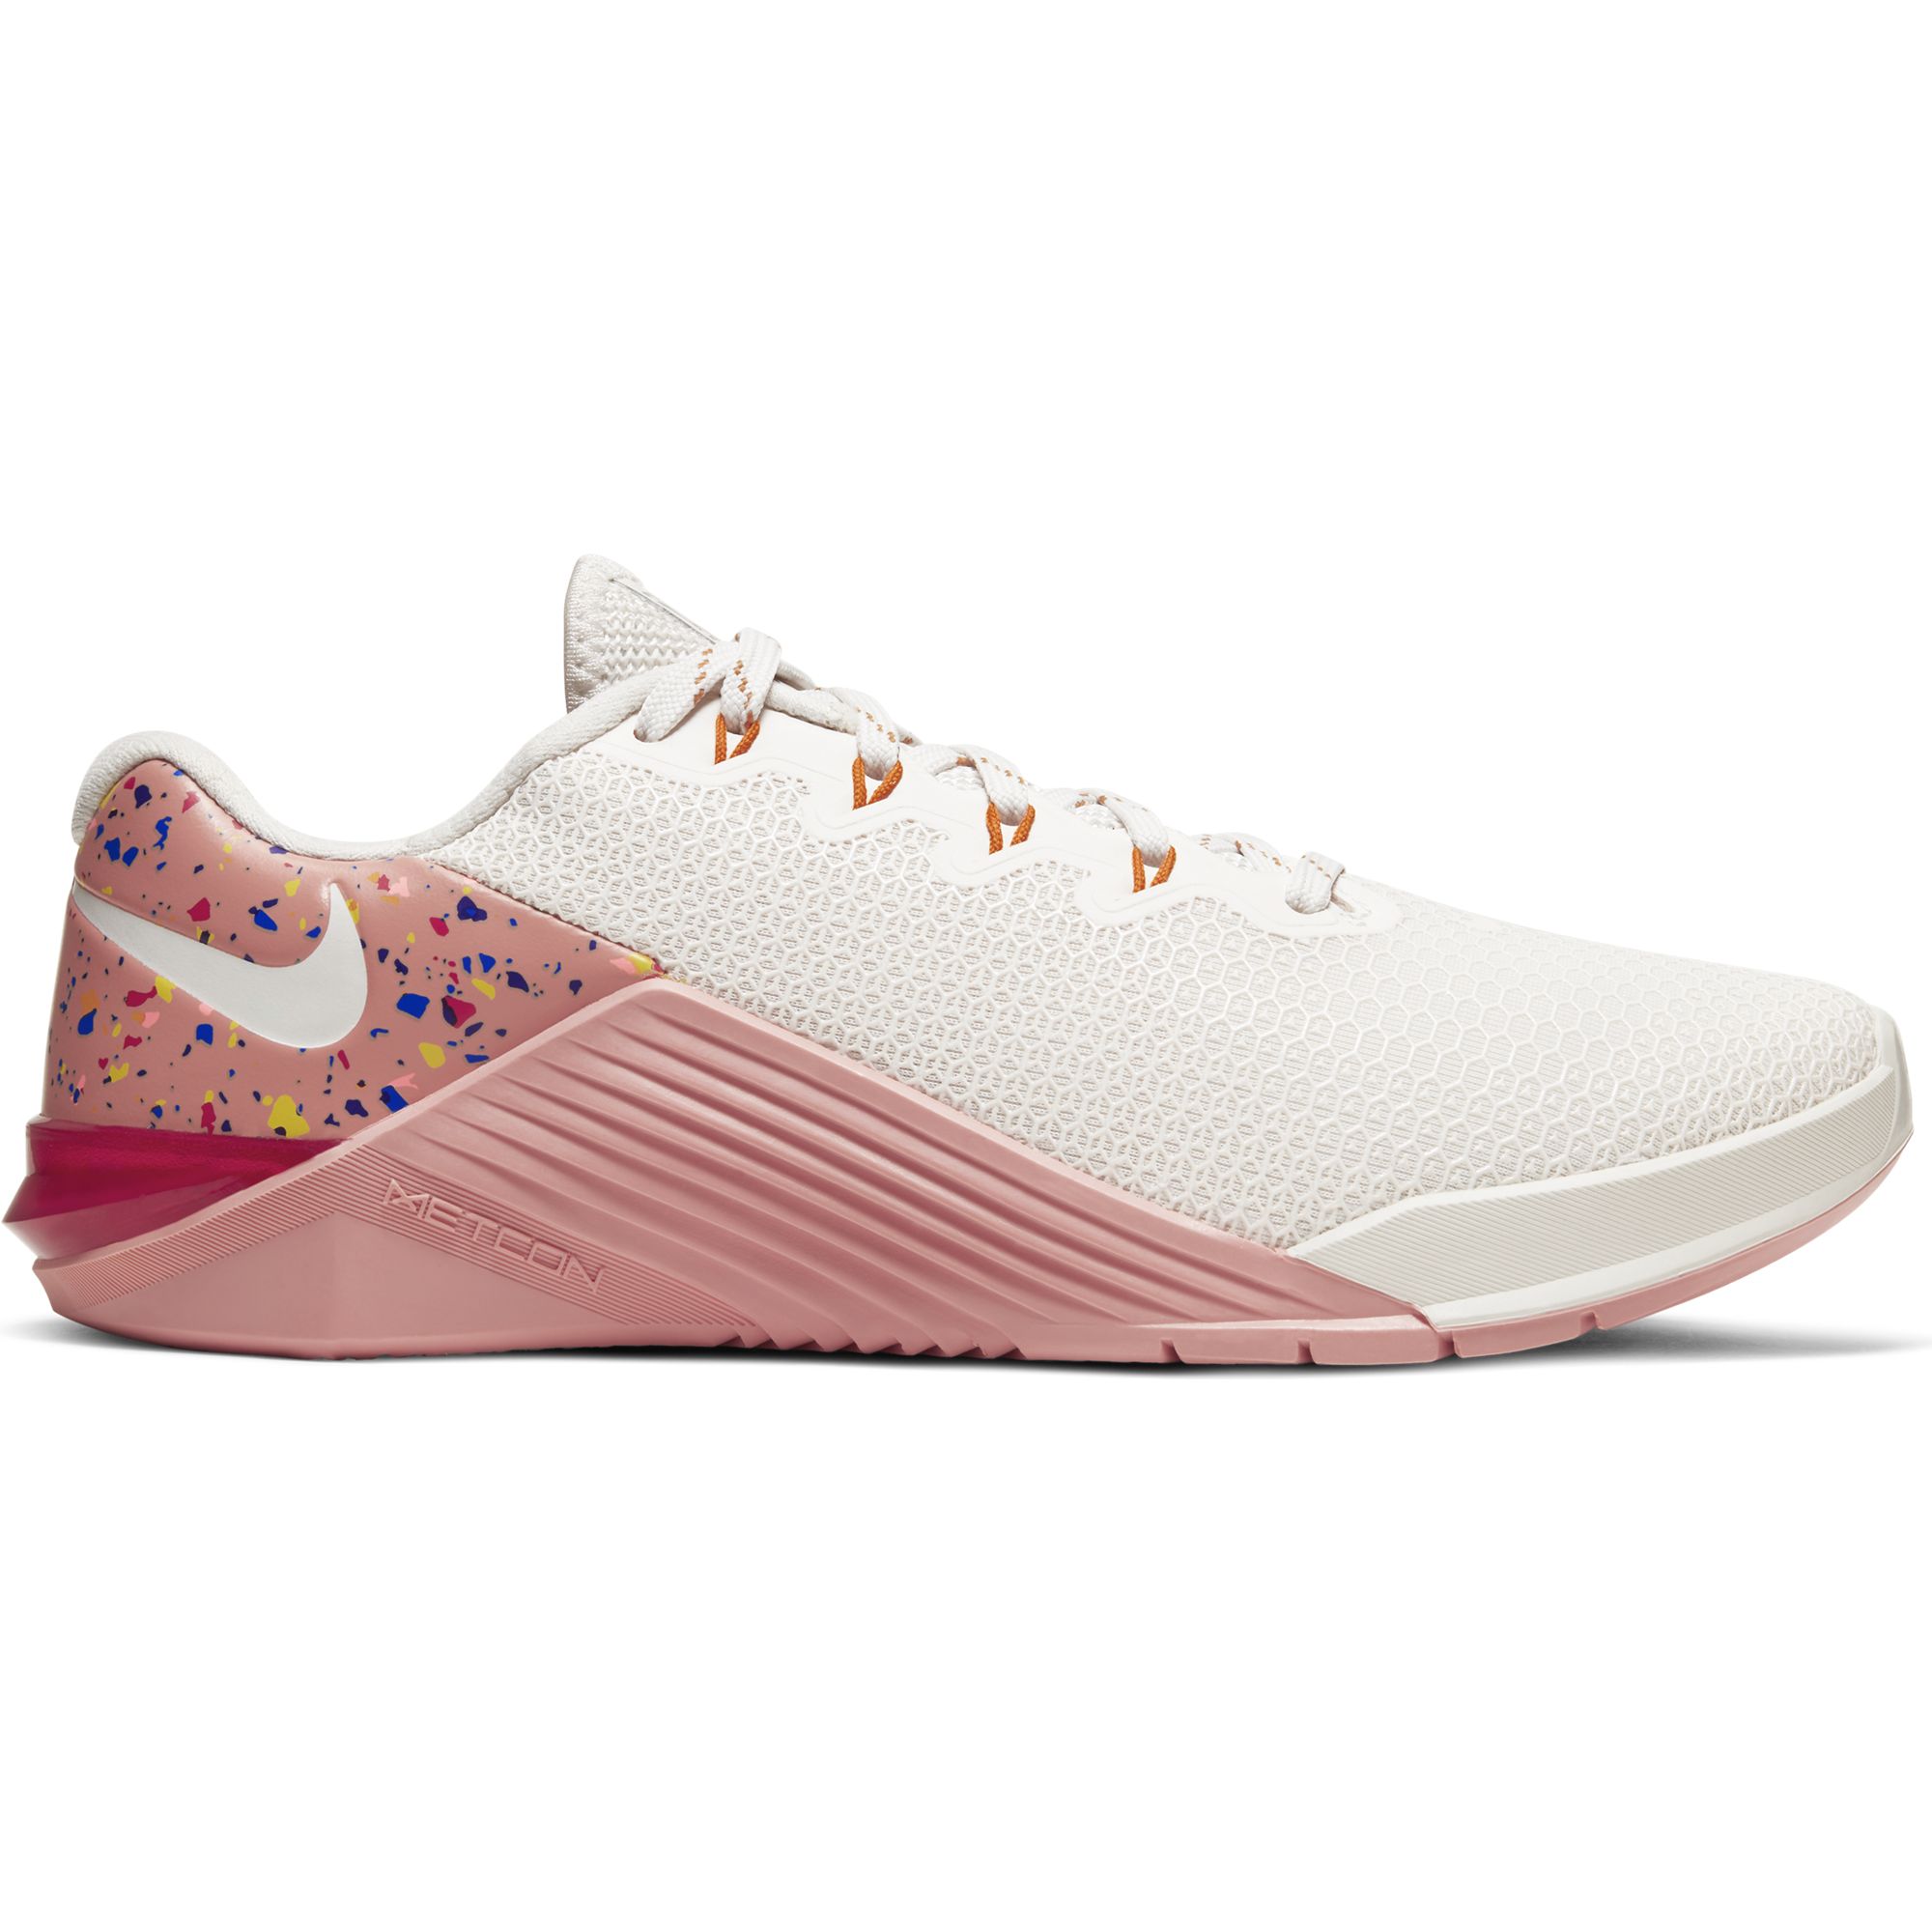 Nike Women Metcon 5 Amp Shoes